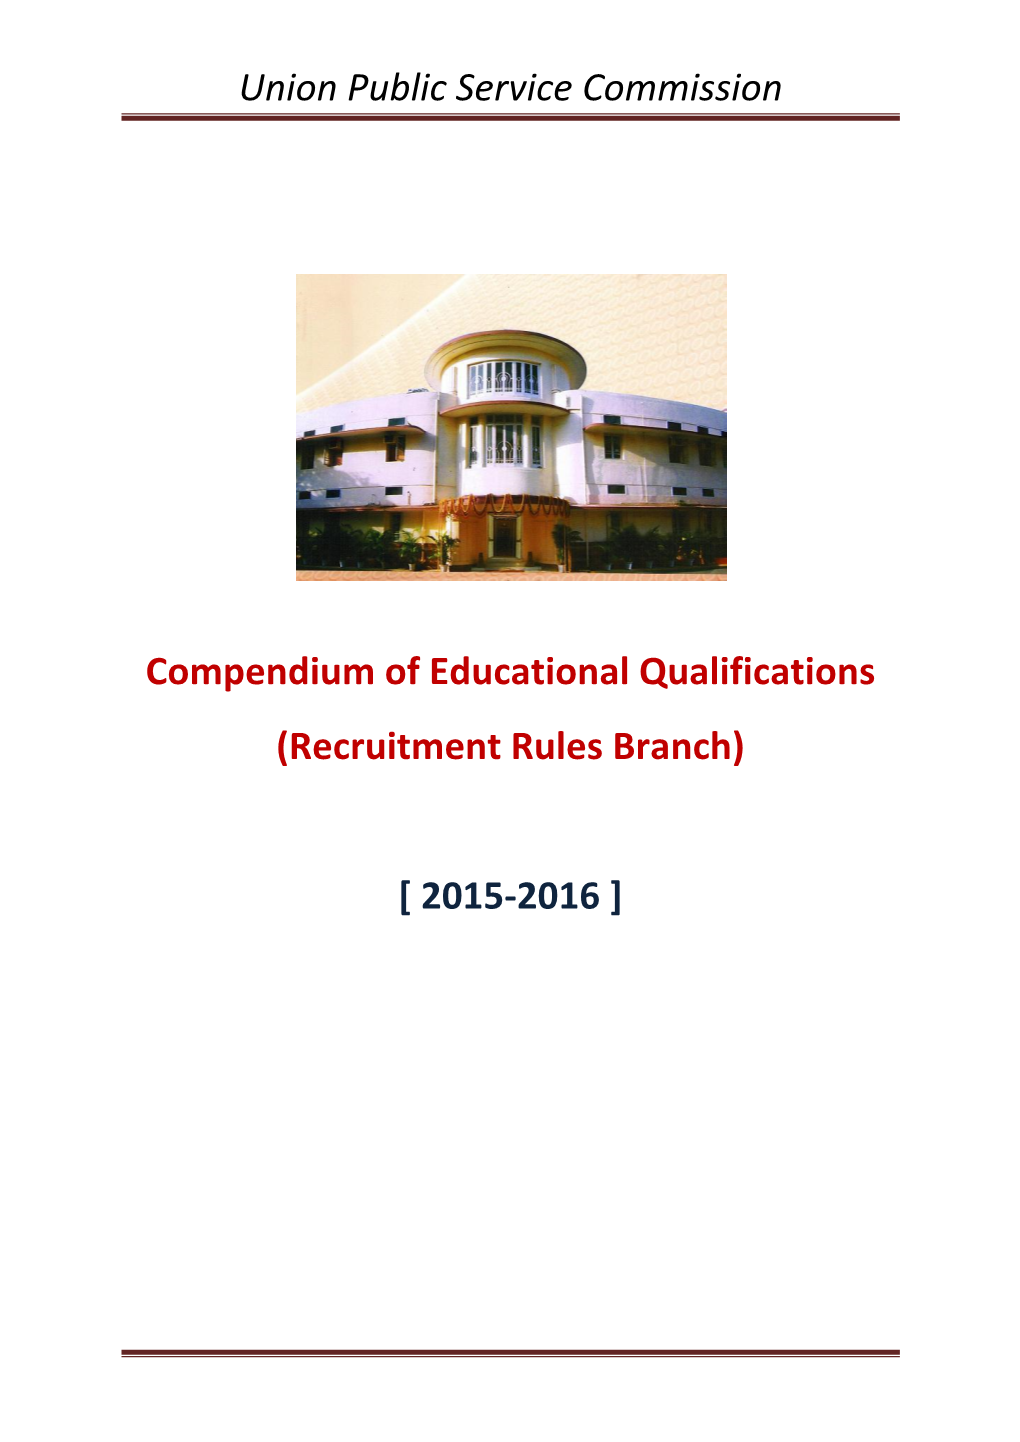 Union Public Service Commission Compendium of Educational